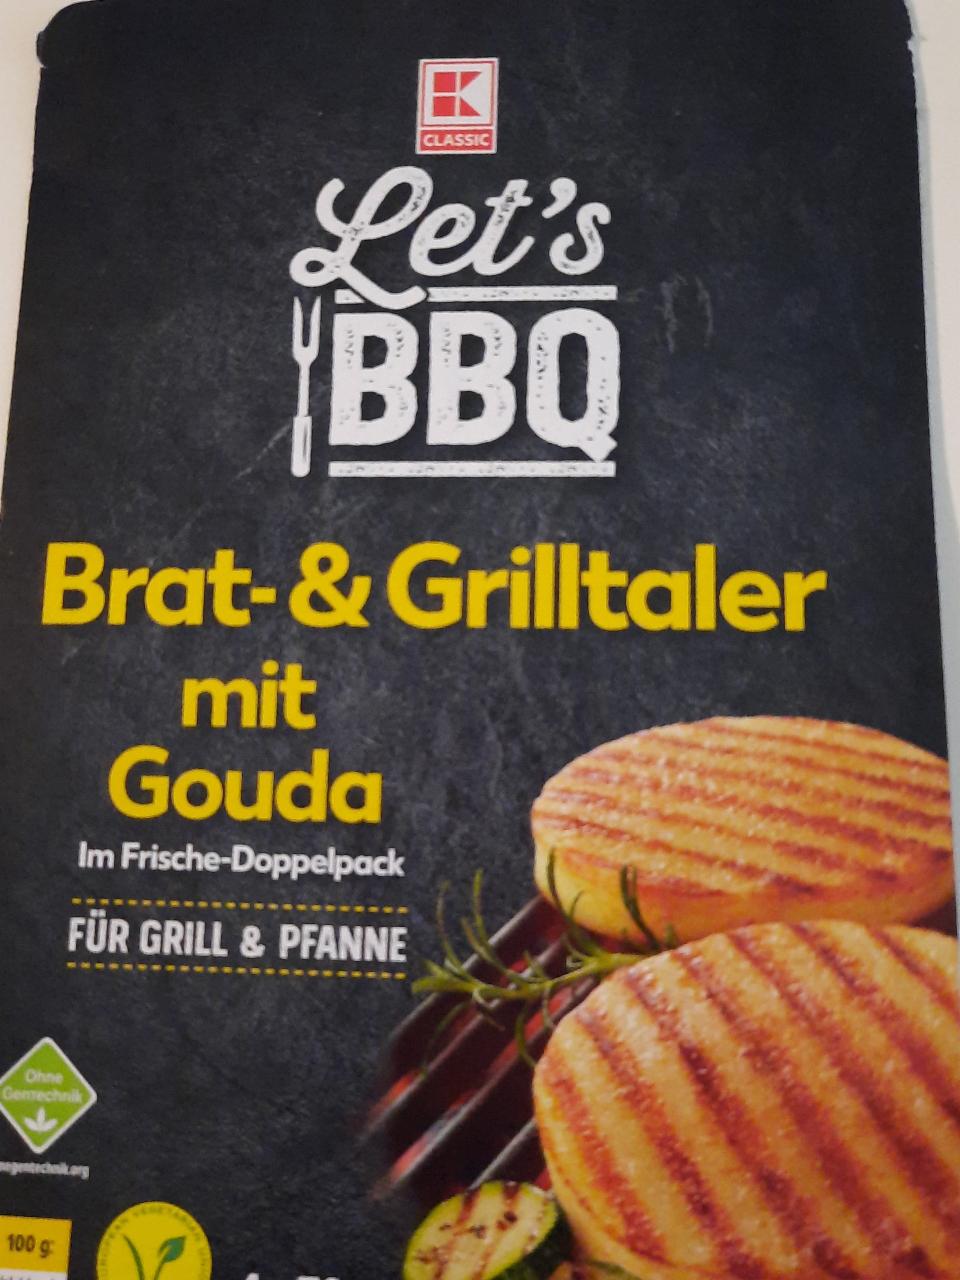 Fotografie - Let's BBQ Brat- & Grilltaler mit Gouda K-Classic